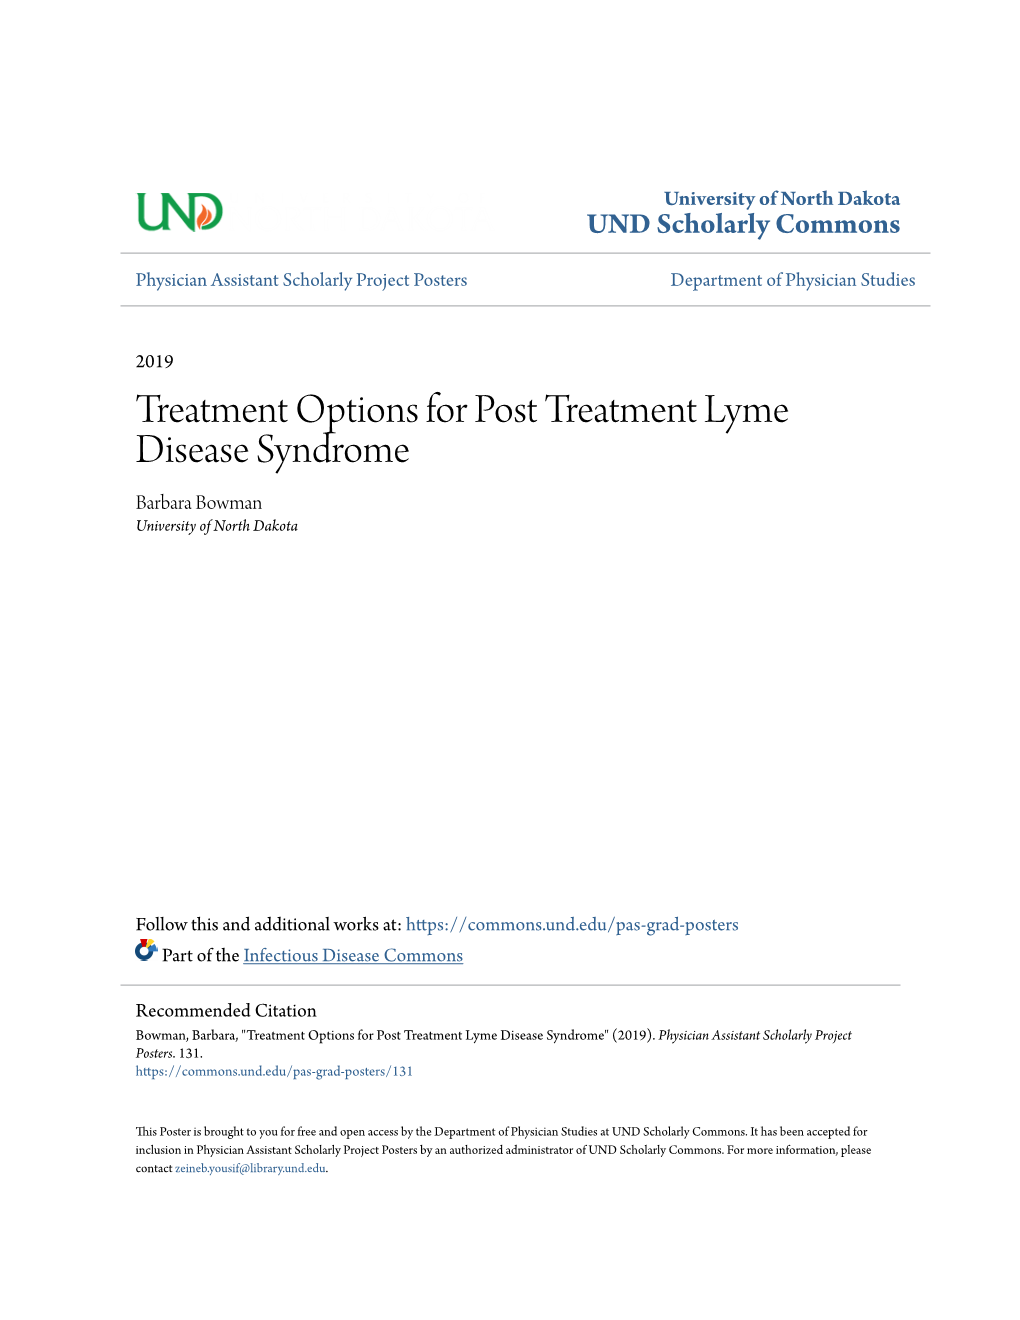 Treatment Options for Post Treatment Lyme Disease Syndrome Barbara Bowman University of North Dakota